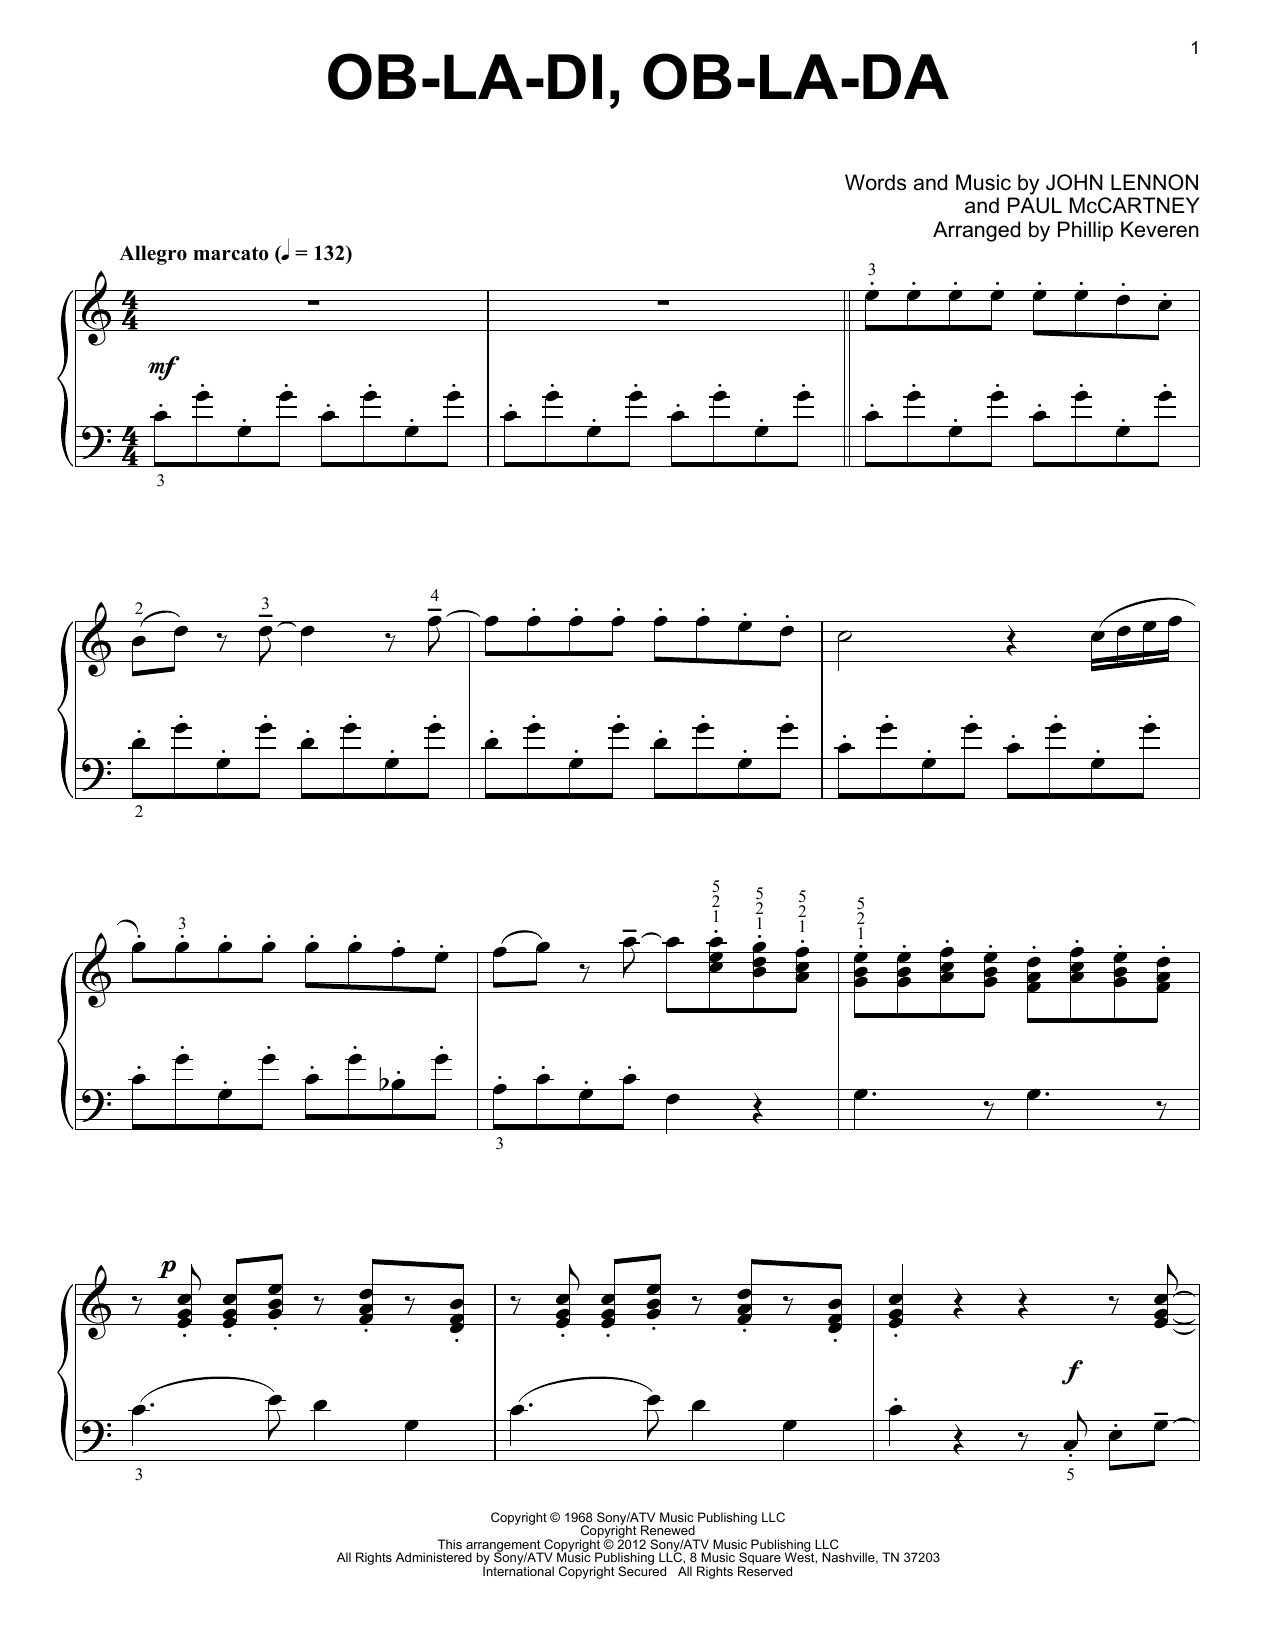 The Beatles Ob-La-Di, Ob-La-Da [Classical version] (arr. Phillip Keveren) Sheet Music Notes & Chords for Easy Piano - Download or Print PDF